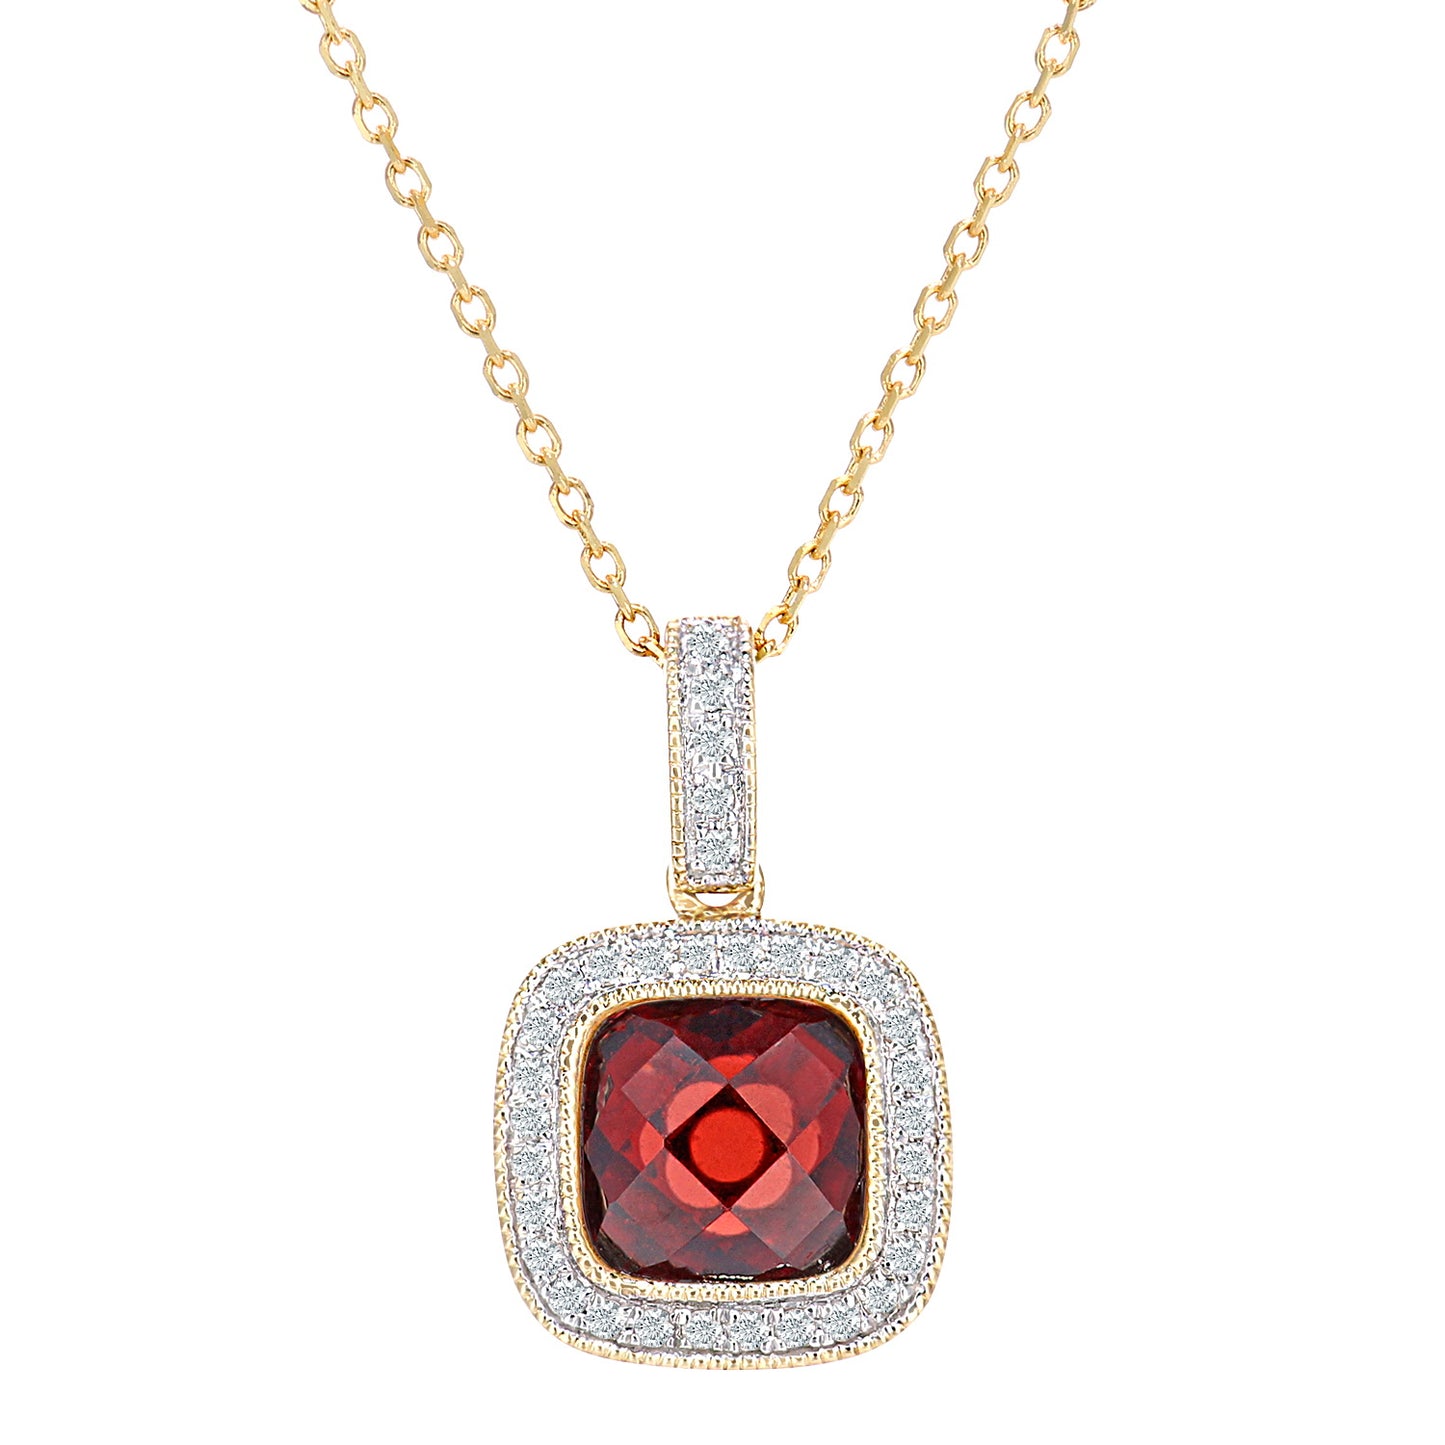 9ct Gold  10pts Diamond Cushion 1.9ct Garnet Pendant Necklace 16" - DP1AXL679YGT